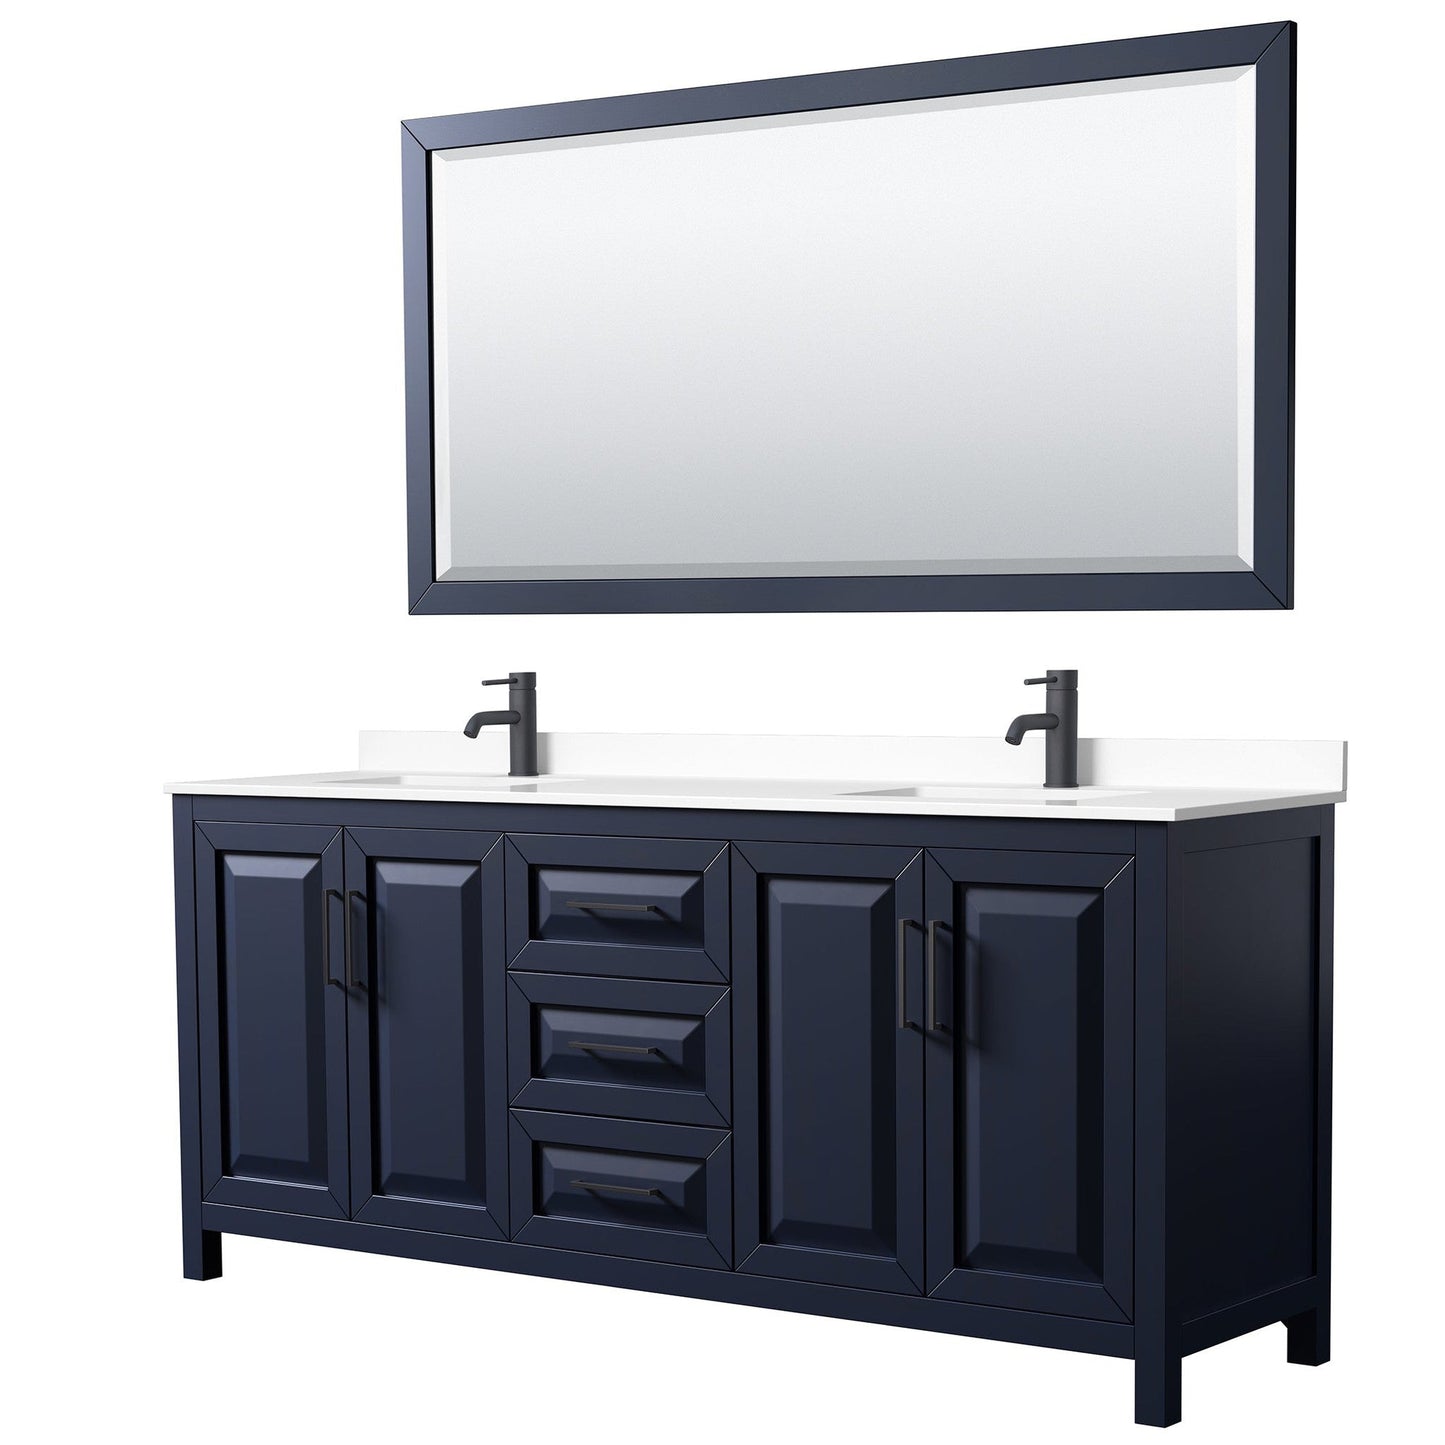 Daria 80" Double Bathroom Vanity in Dark Blue, White Cultured Marble Countertop, Undermount Square Sinks, Matte Black Trim, 70" Mirror